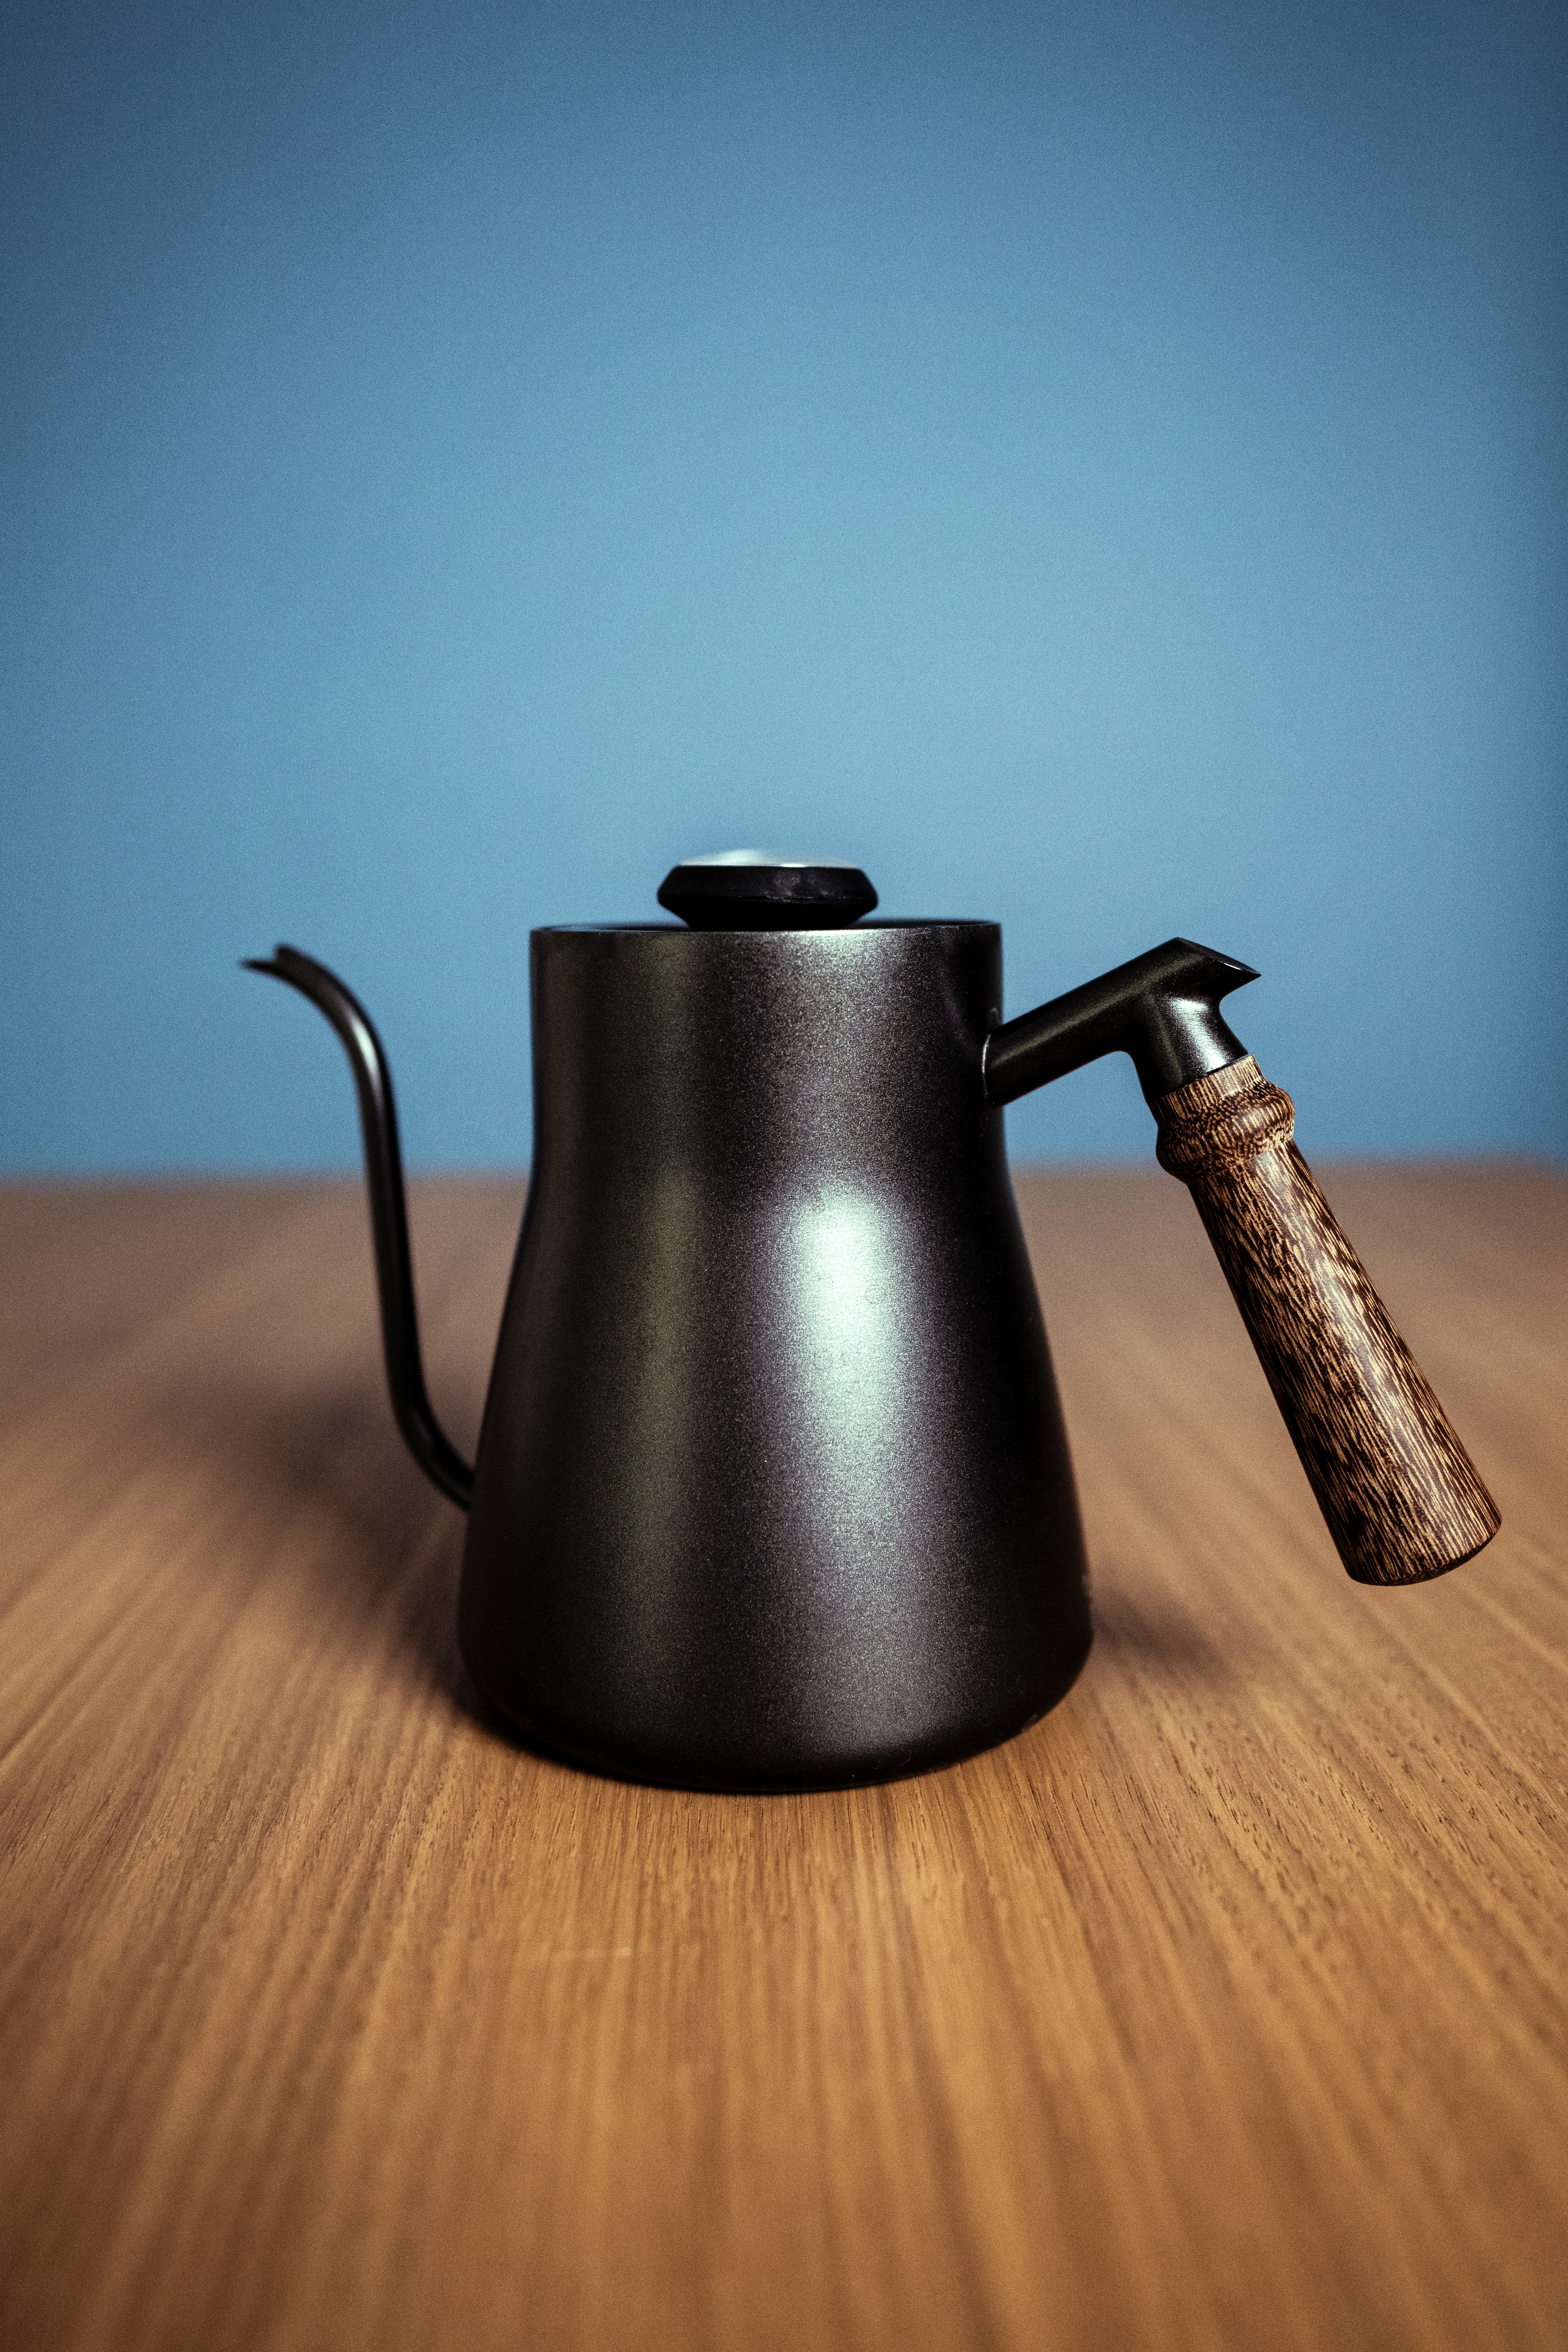 tablewares, miscellanea, miscellaneous, wood, wooden, table, teapot, kettle